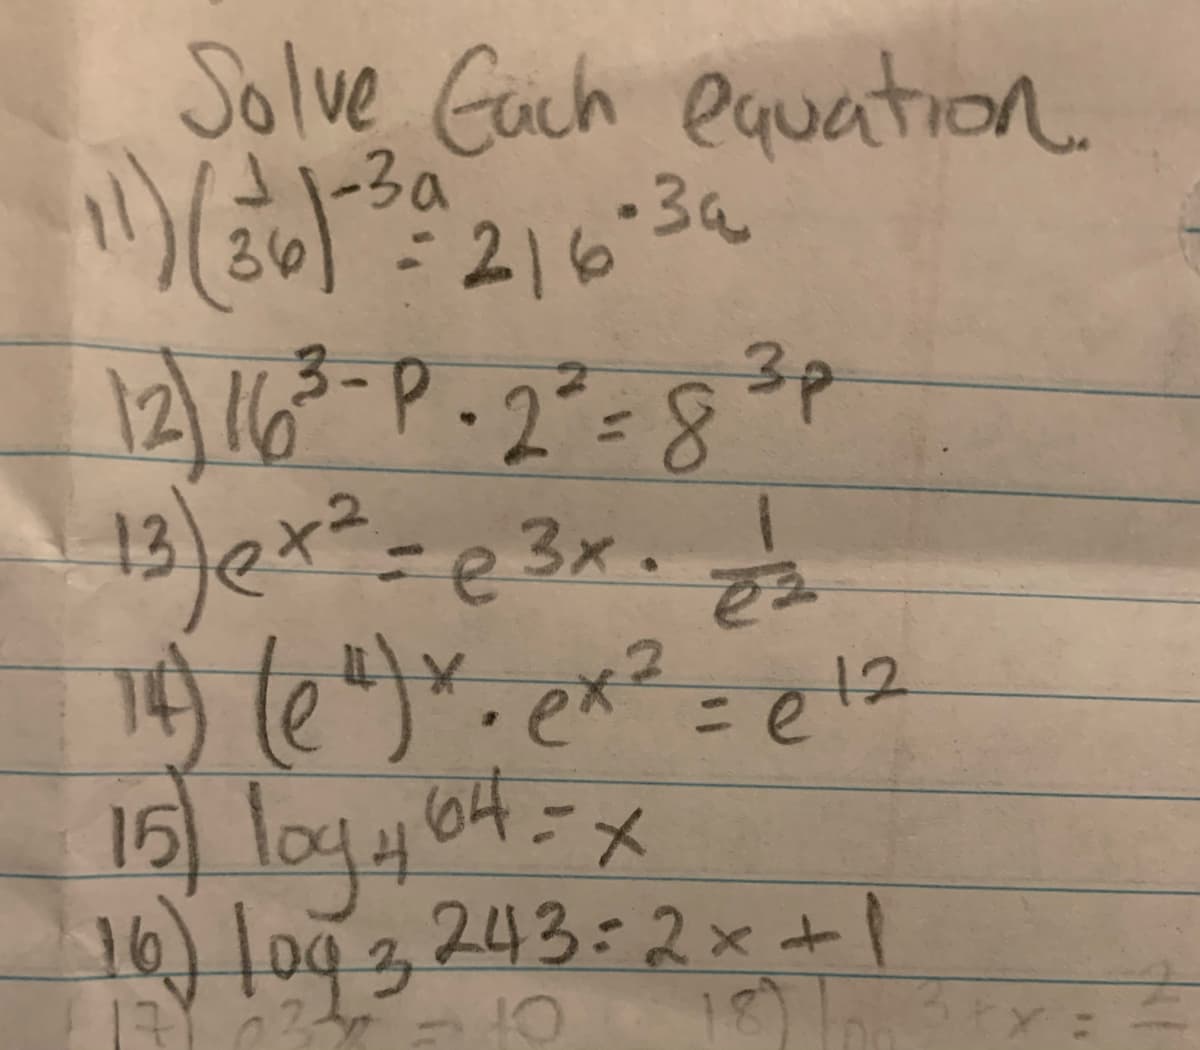 Solve Guch equation
-3a
-34
-216
13
19le.ex²=e12
15) loyas
64
16) lo93
243:2x+
18)
